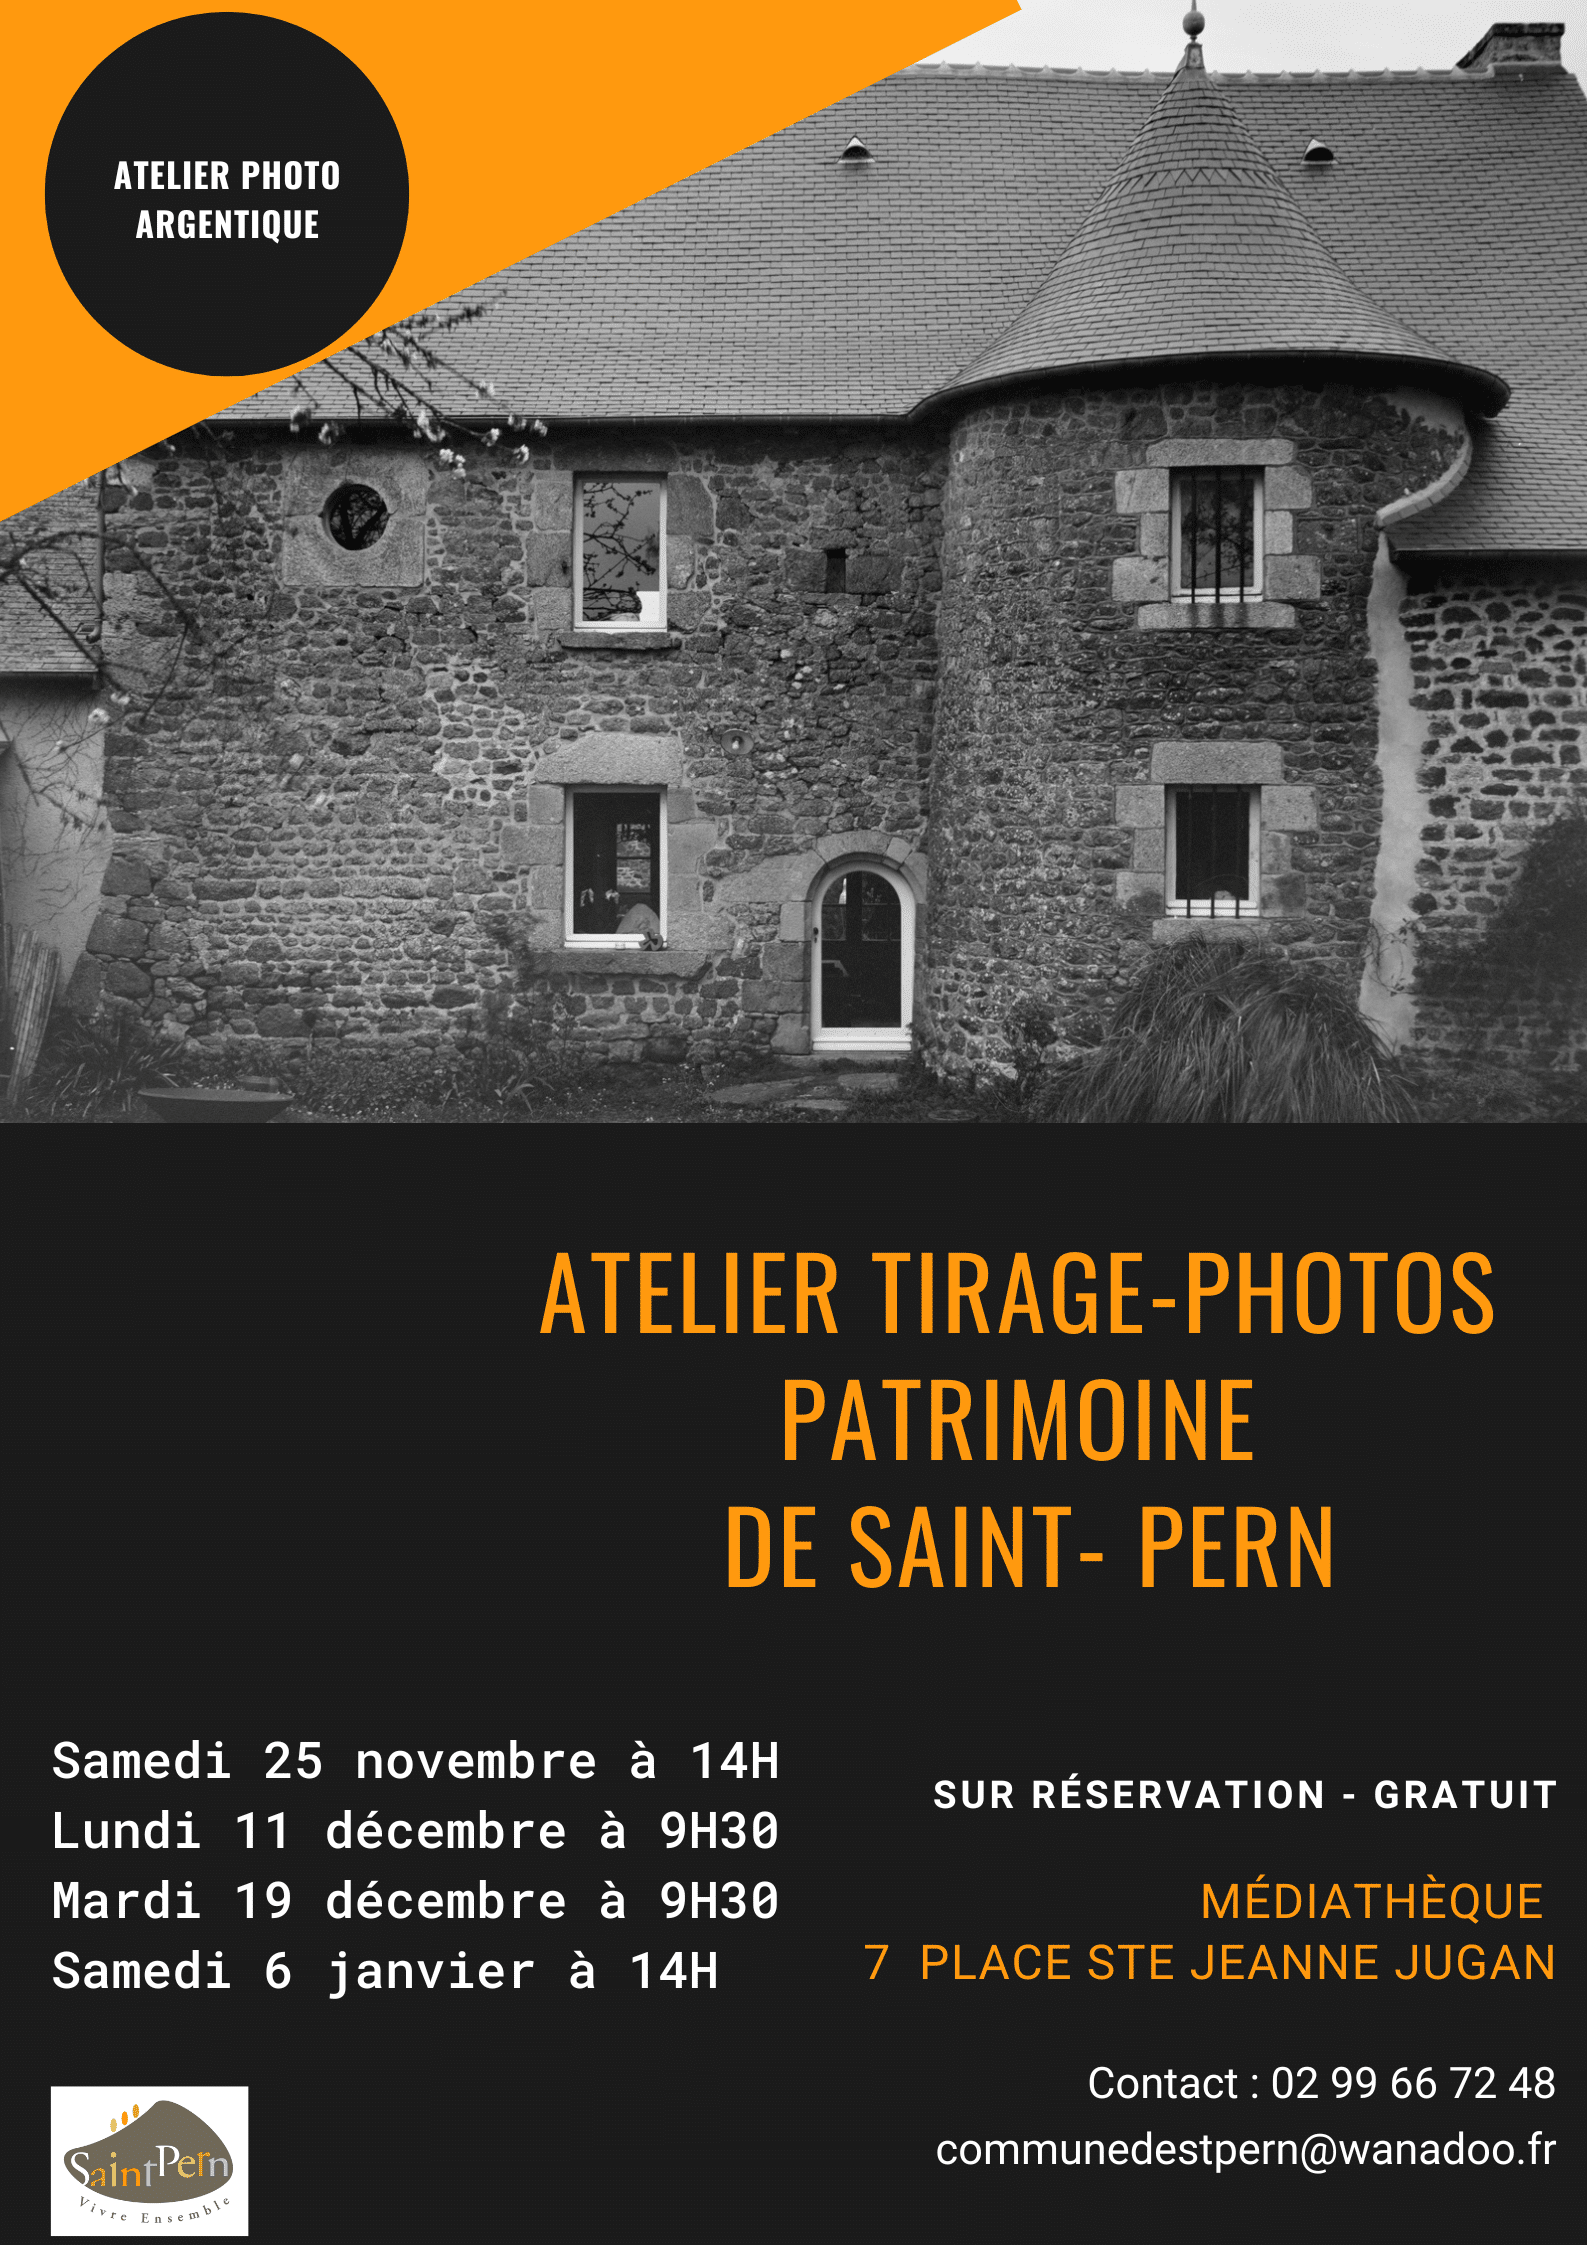 ATELIER TIRAGE-PHOTOS PATRIMOINE DE SAINT PERN